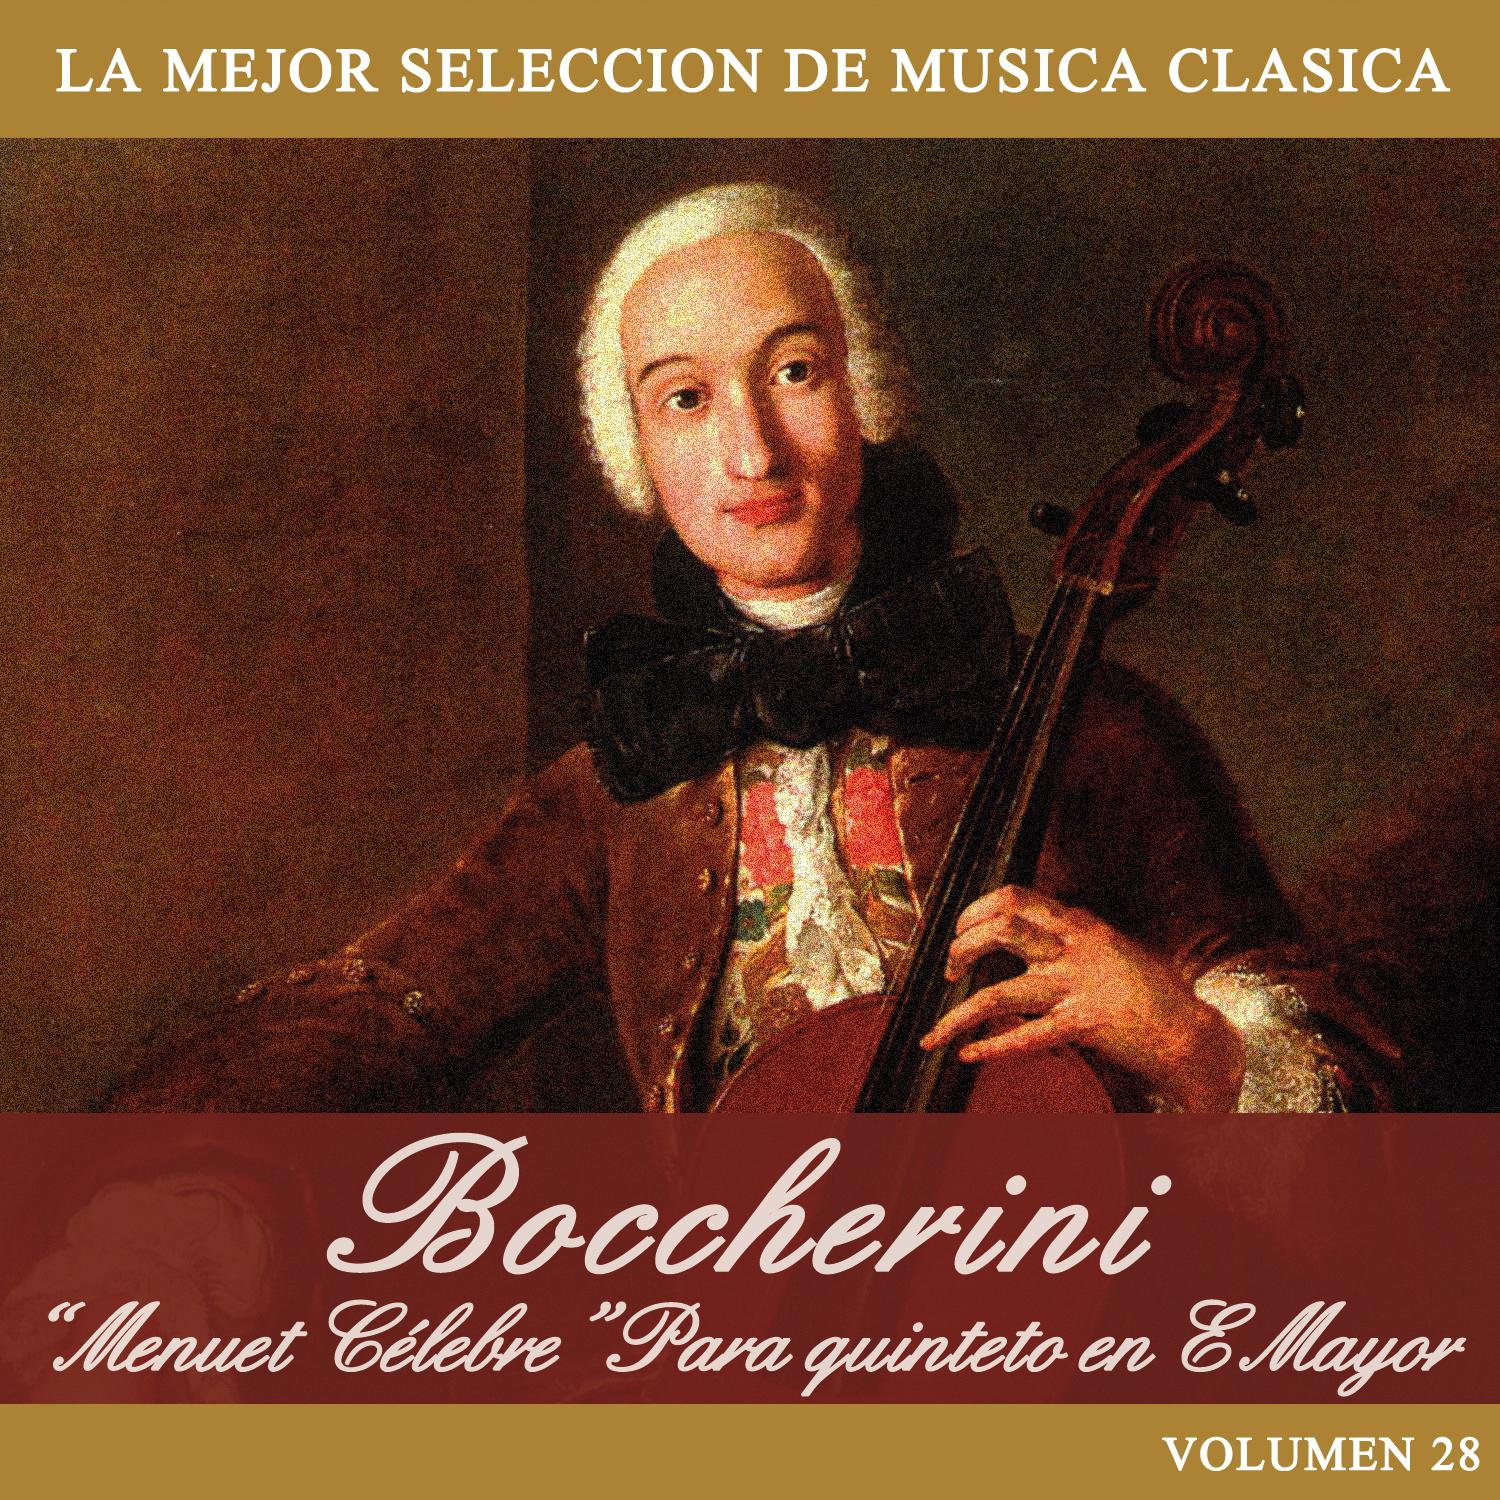 Boccherini: " Menuet Ce lebre" Para quinteto en E Mayor